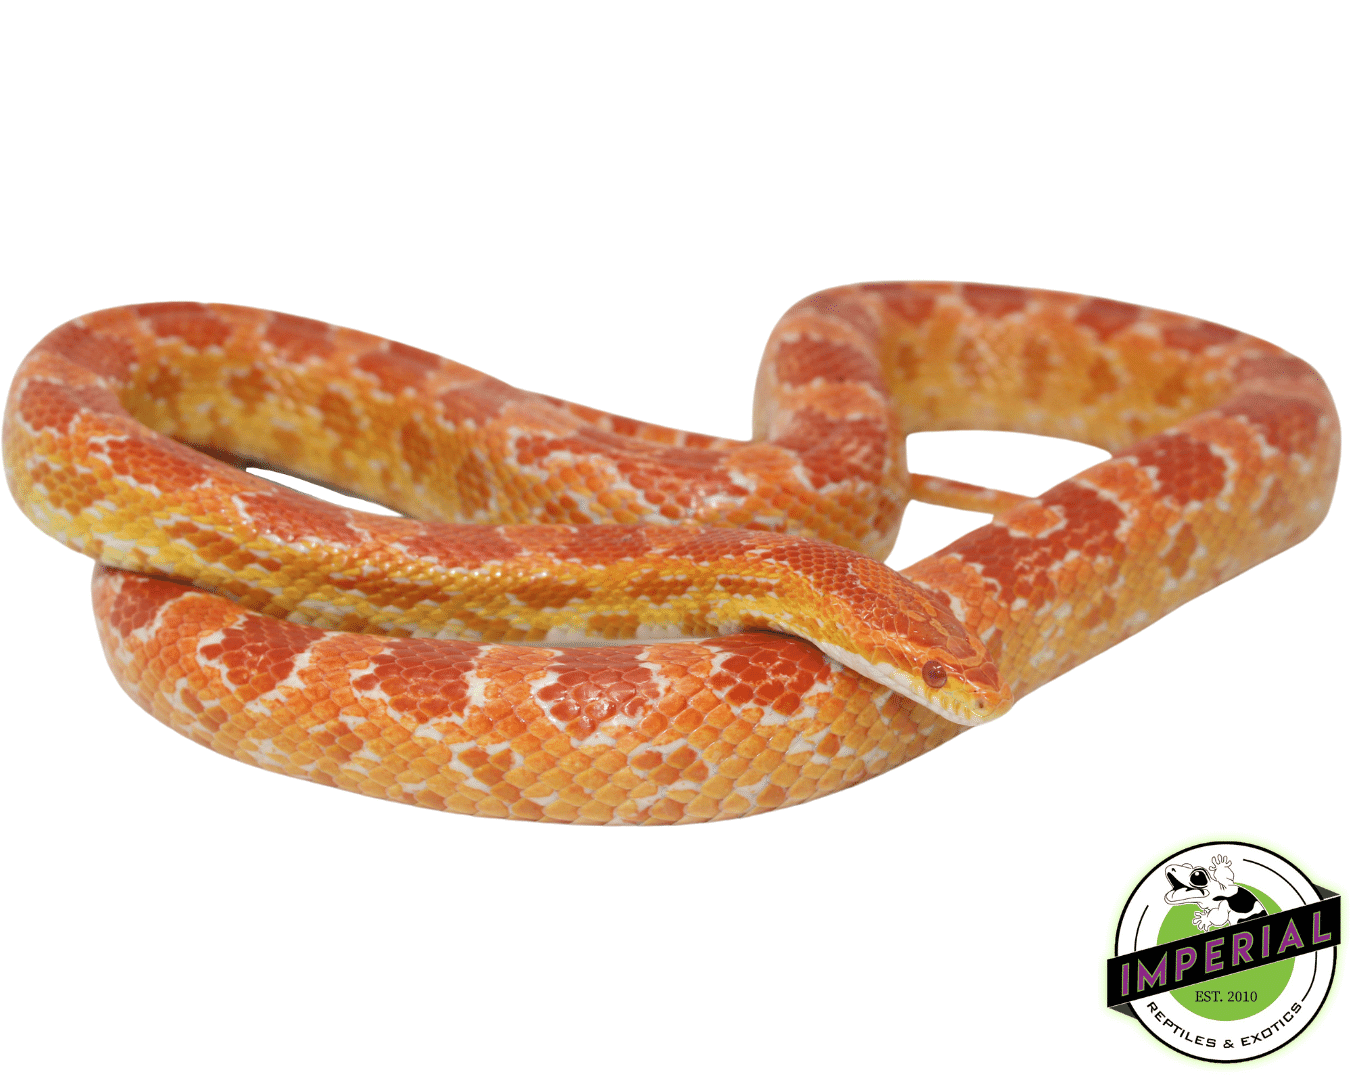 albino corn snake for sale, buy reptiles online